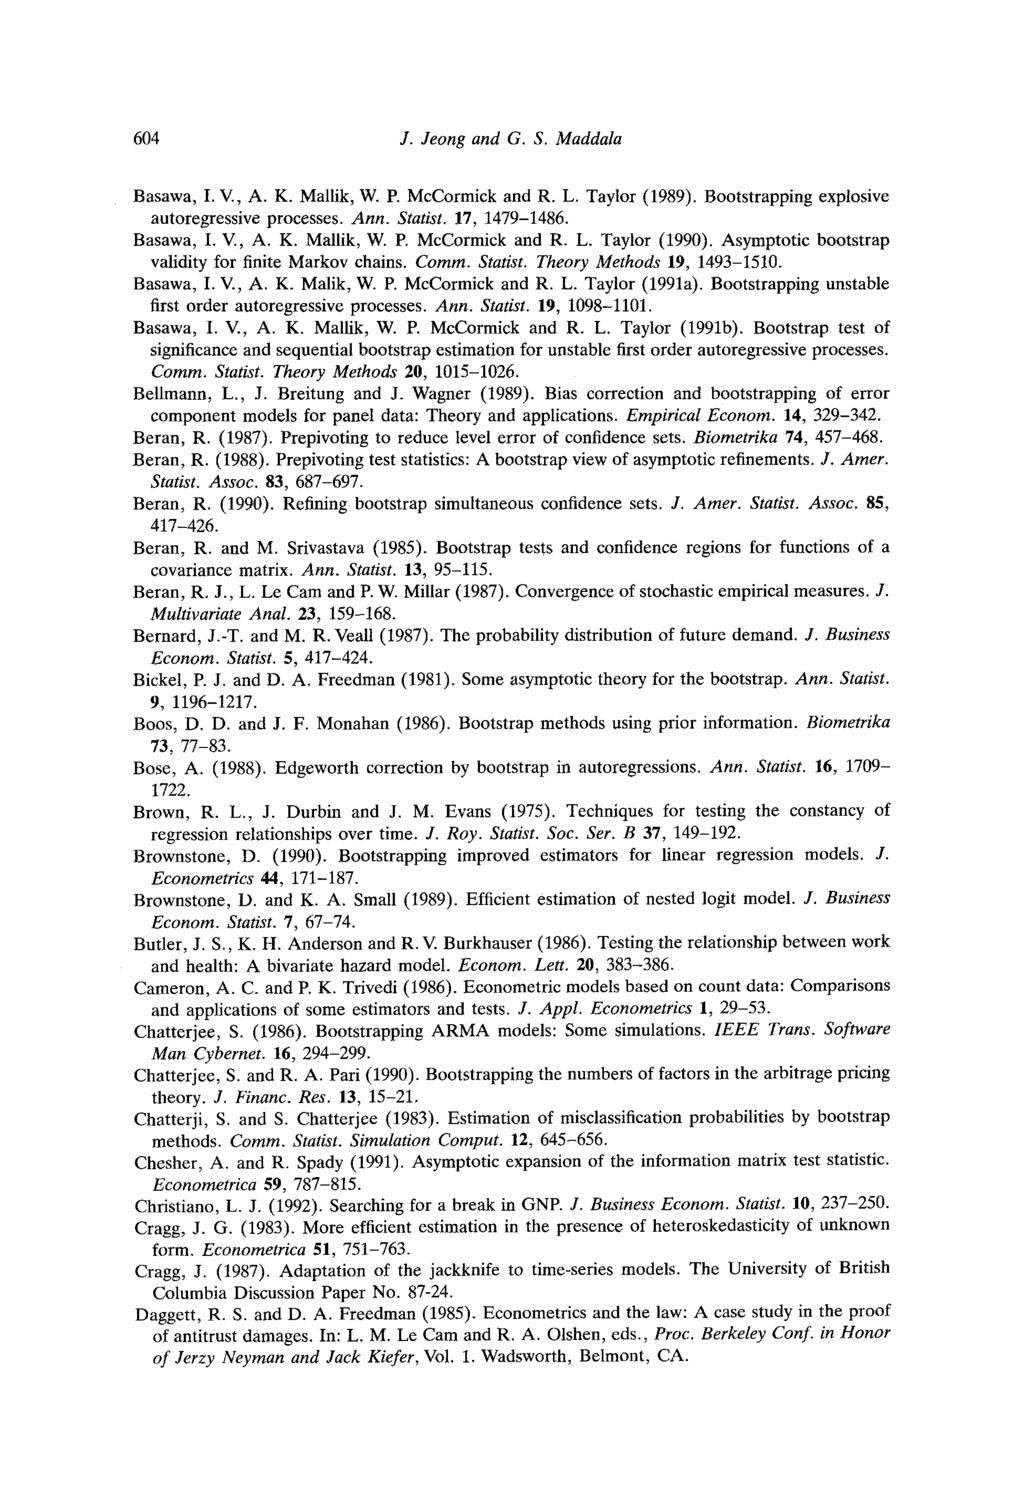 604 J. Jeong and G. S. Maddala Basawa, I. V., A. K. Mallik, W. E McCormick and R. L. Taylor (1989). Bootstrapping explosive autoregressive processes. Ann. Statist. 17, 1479-1486. Basawa, I. V., A. K. Mallik, W. E McCormick and R. L. Taylor (1990).